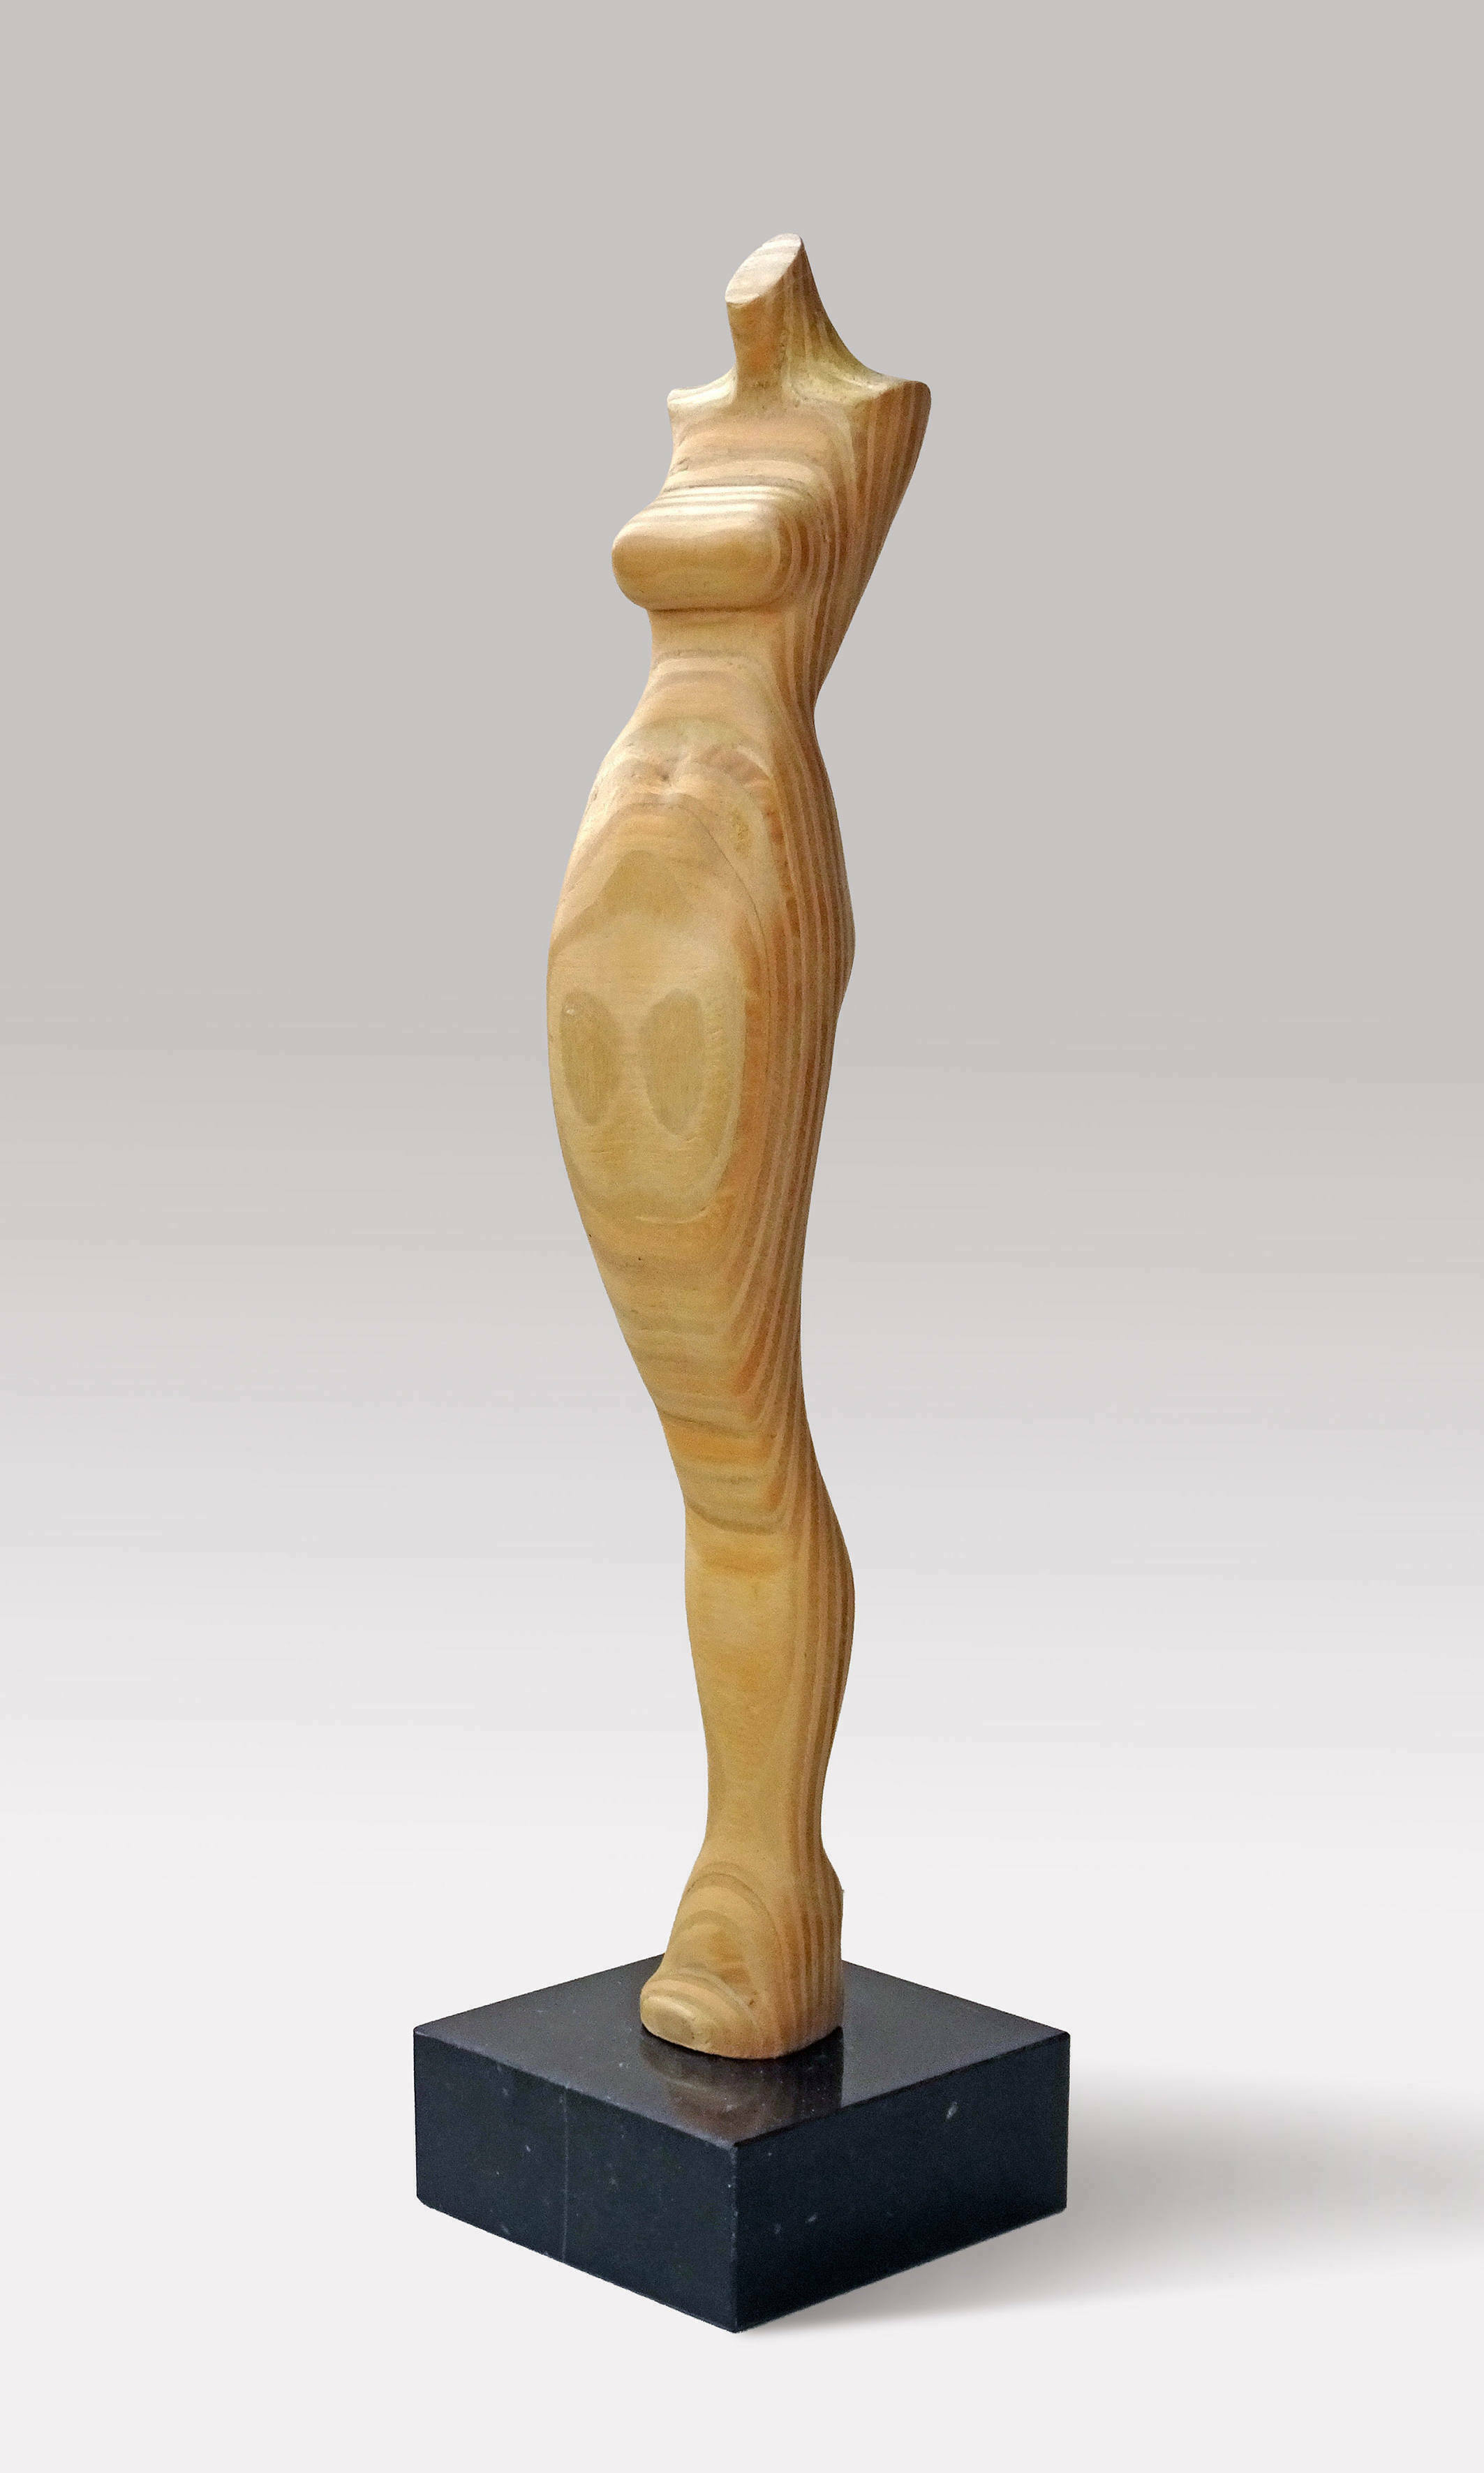 Skulptur "Model (Holzfigur)" (2001)